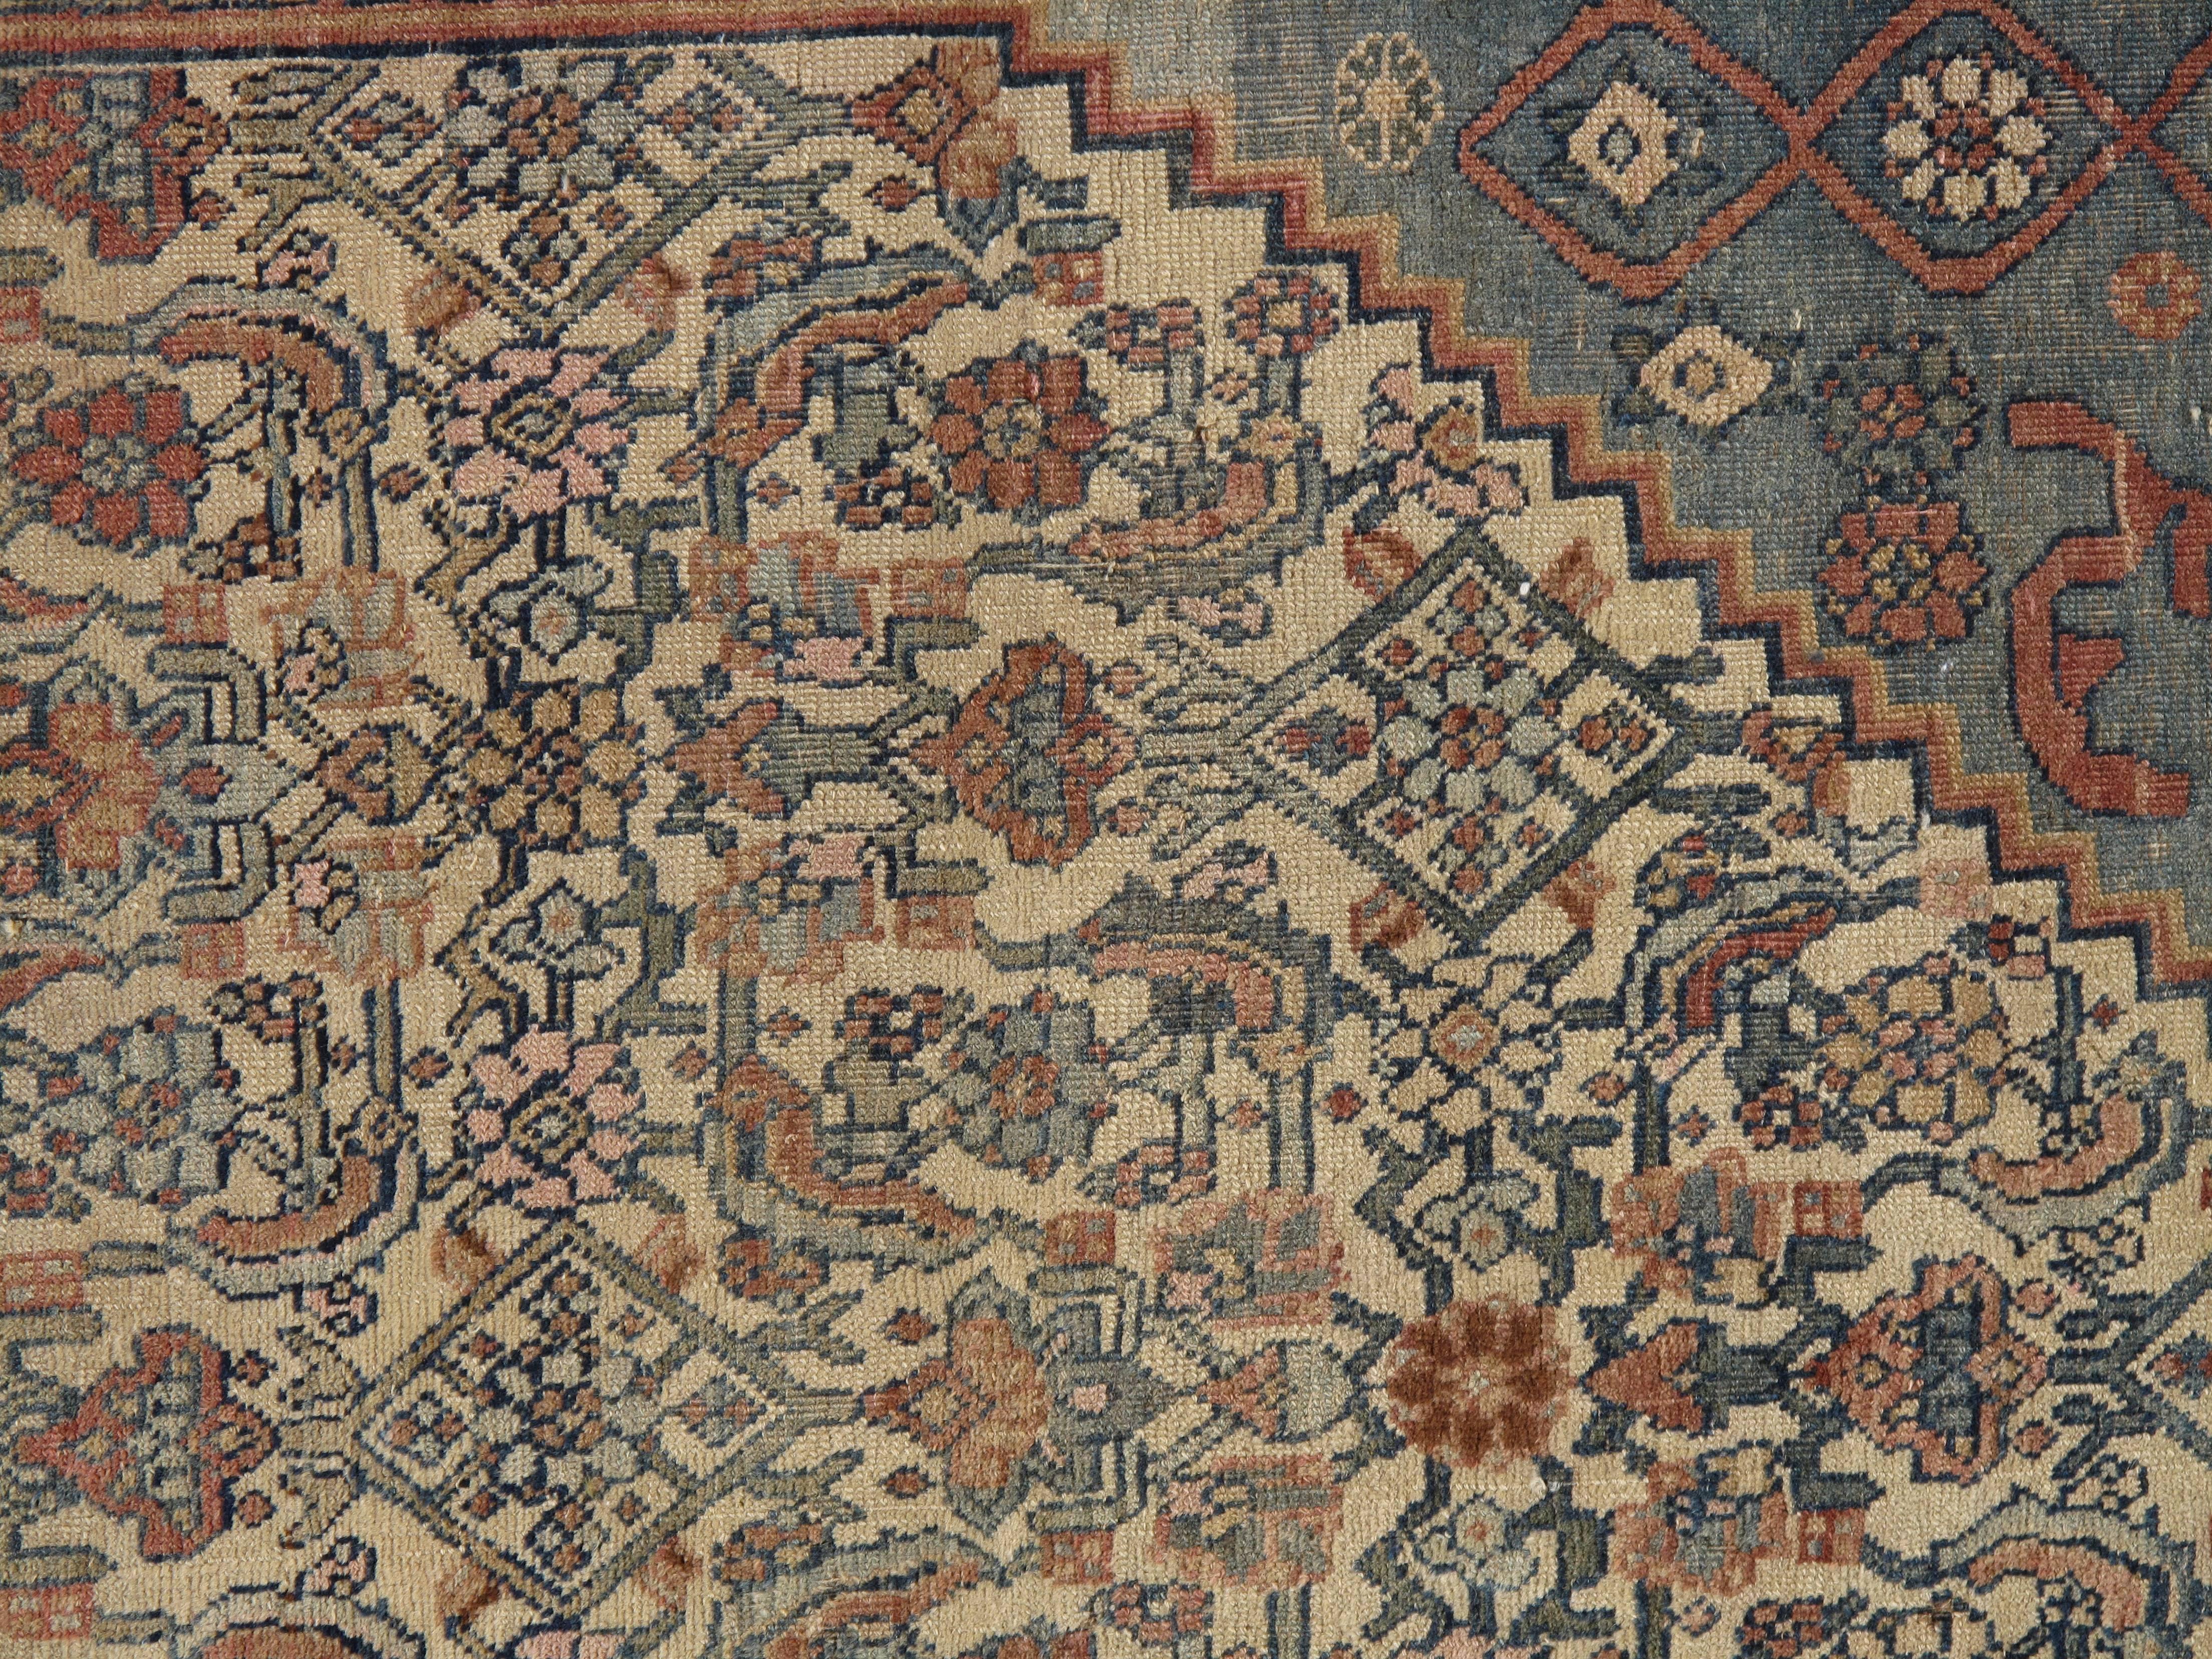 Persian Antique Bijar Carpet Oriental Rug, Handmade, Ivory and Light Blue, Terracotta